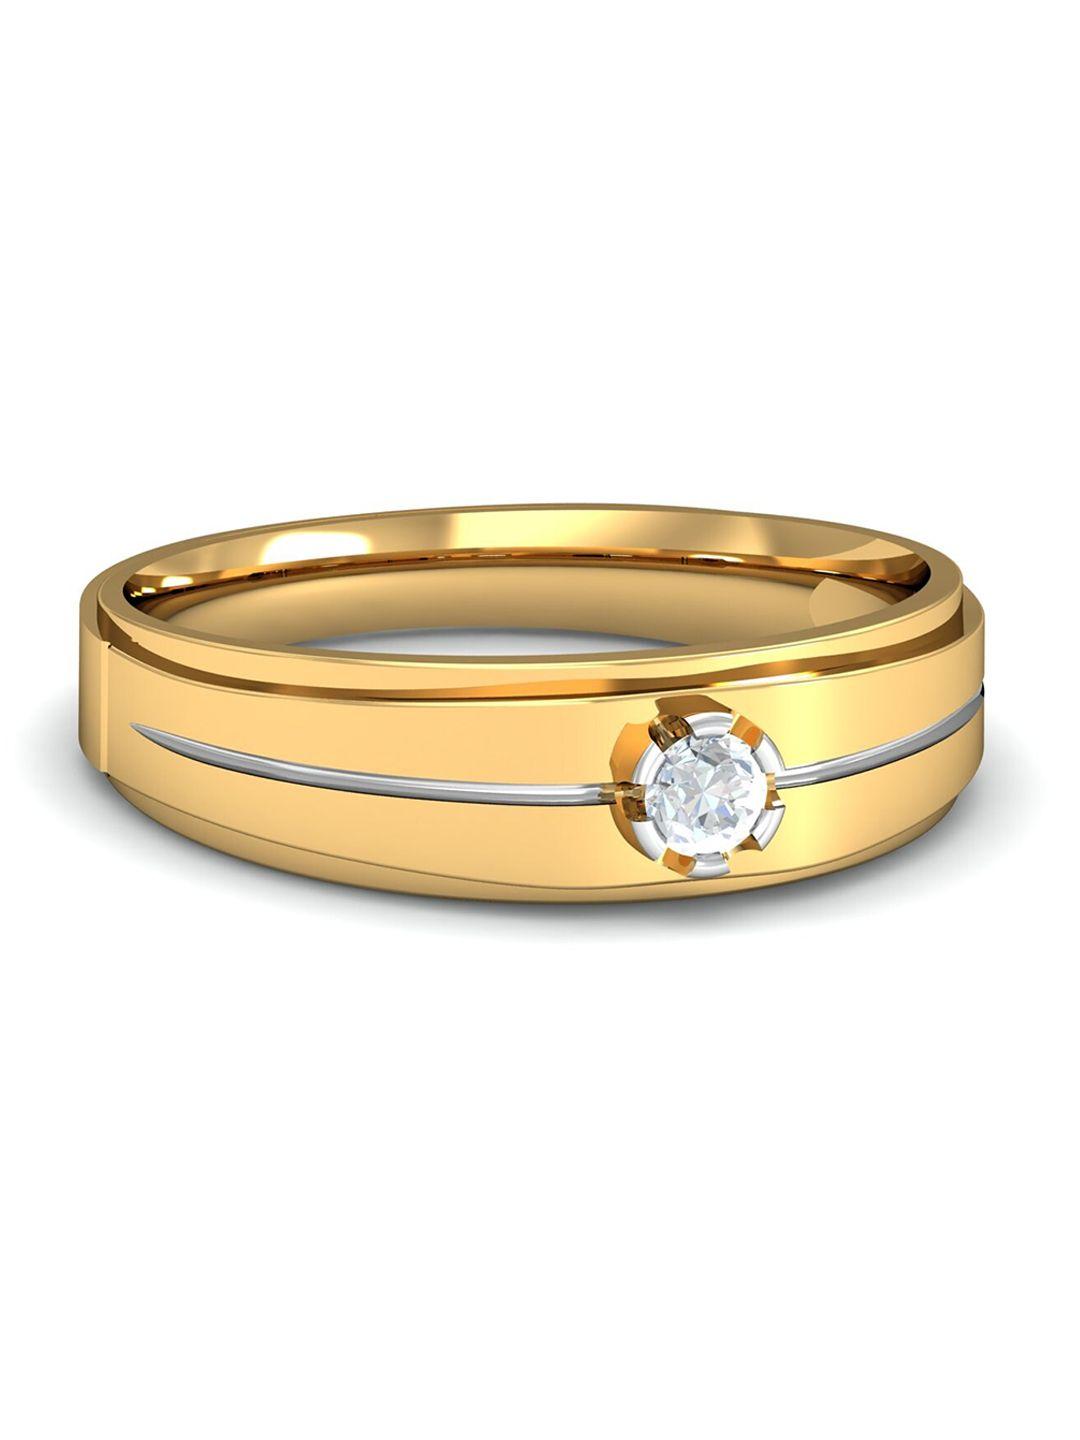 kuberbox-men-18kt-diamond-studded-solitary-gold-ring---5.2-gm